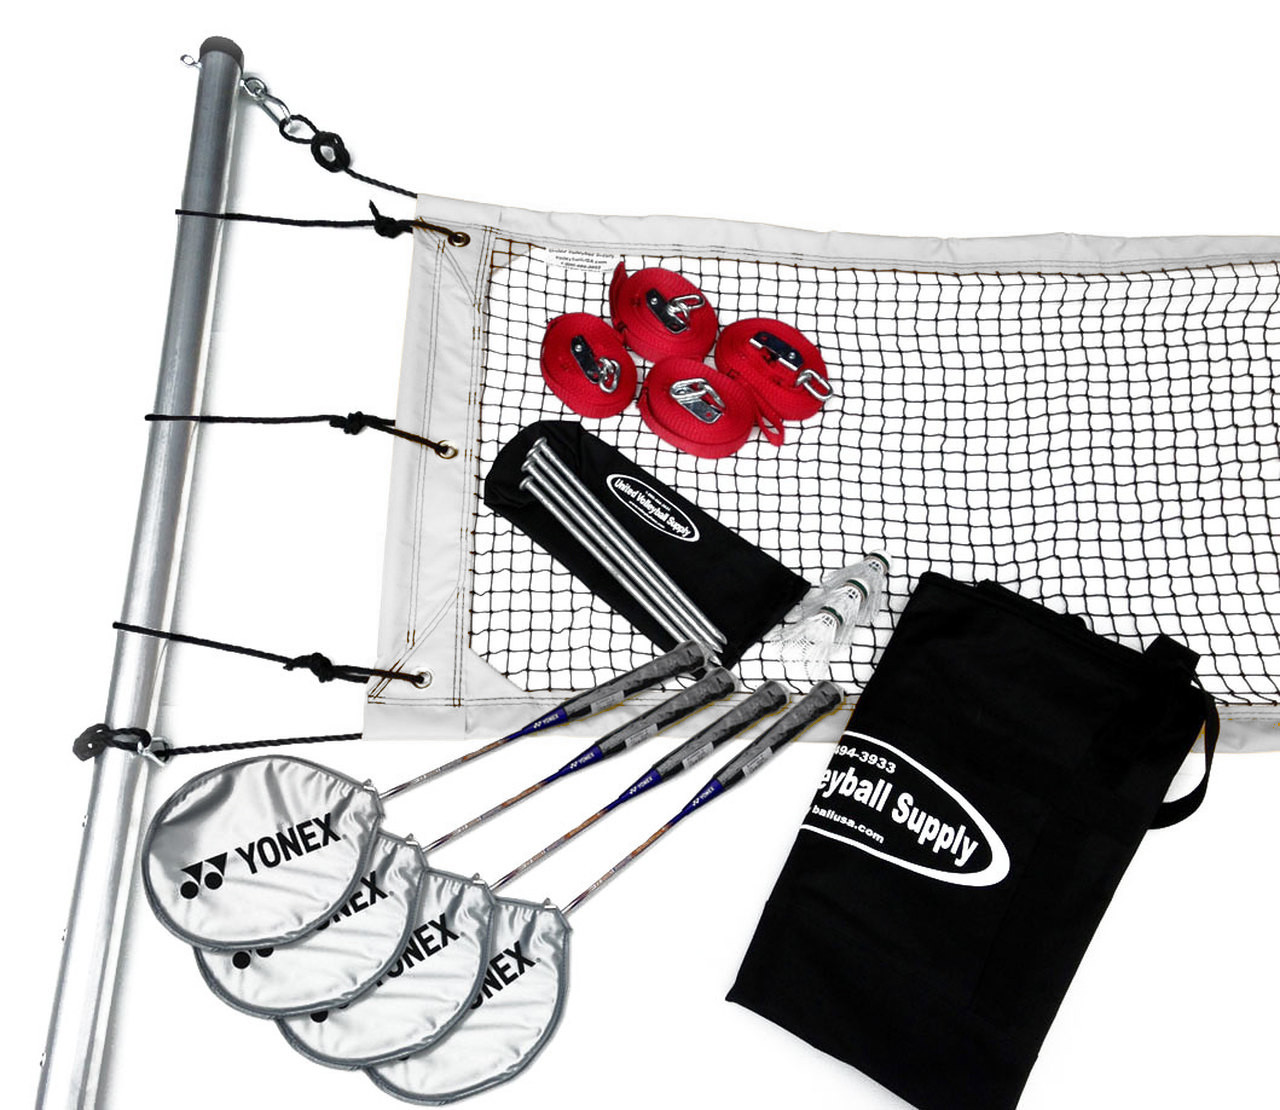 V-B American: High Quality Portable Volleyball / Badminton Set